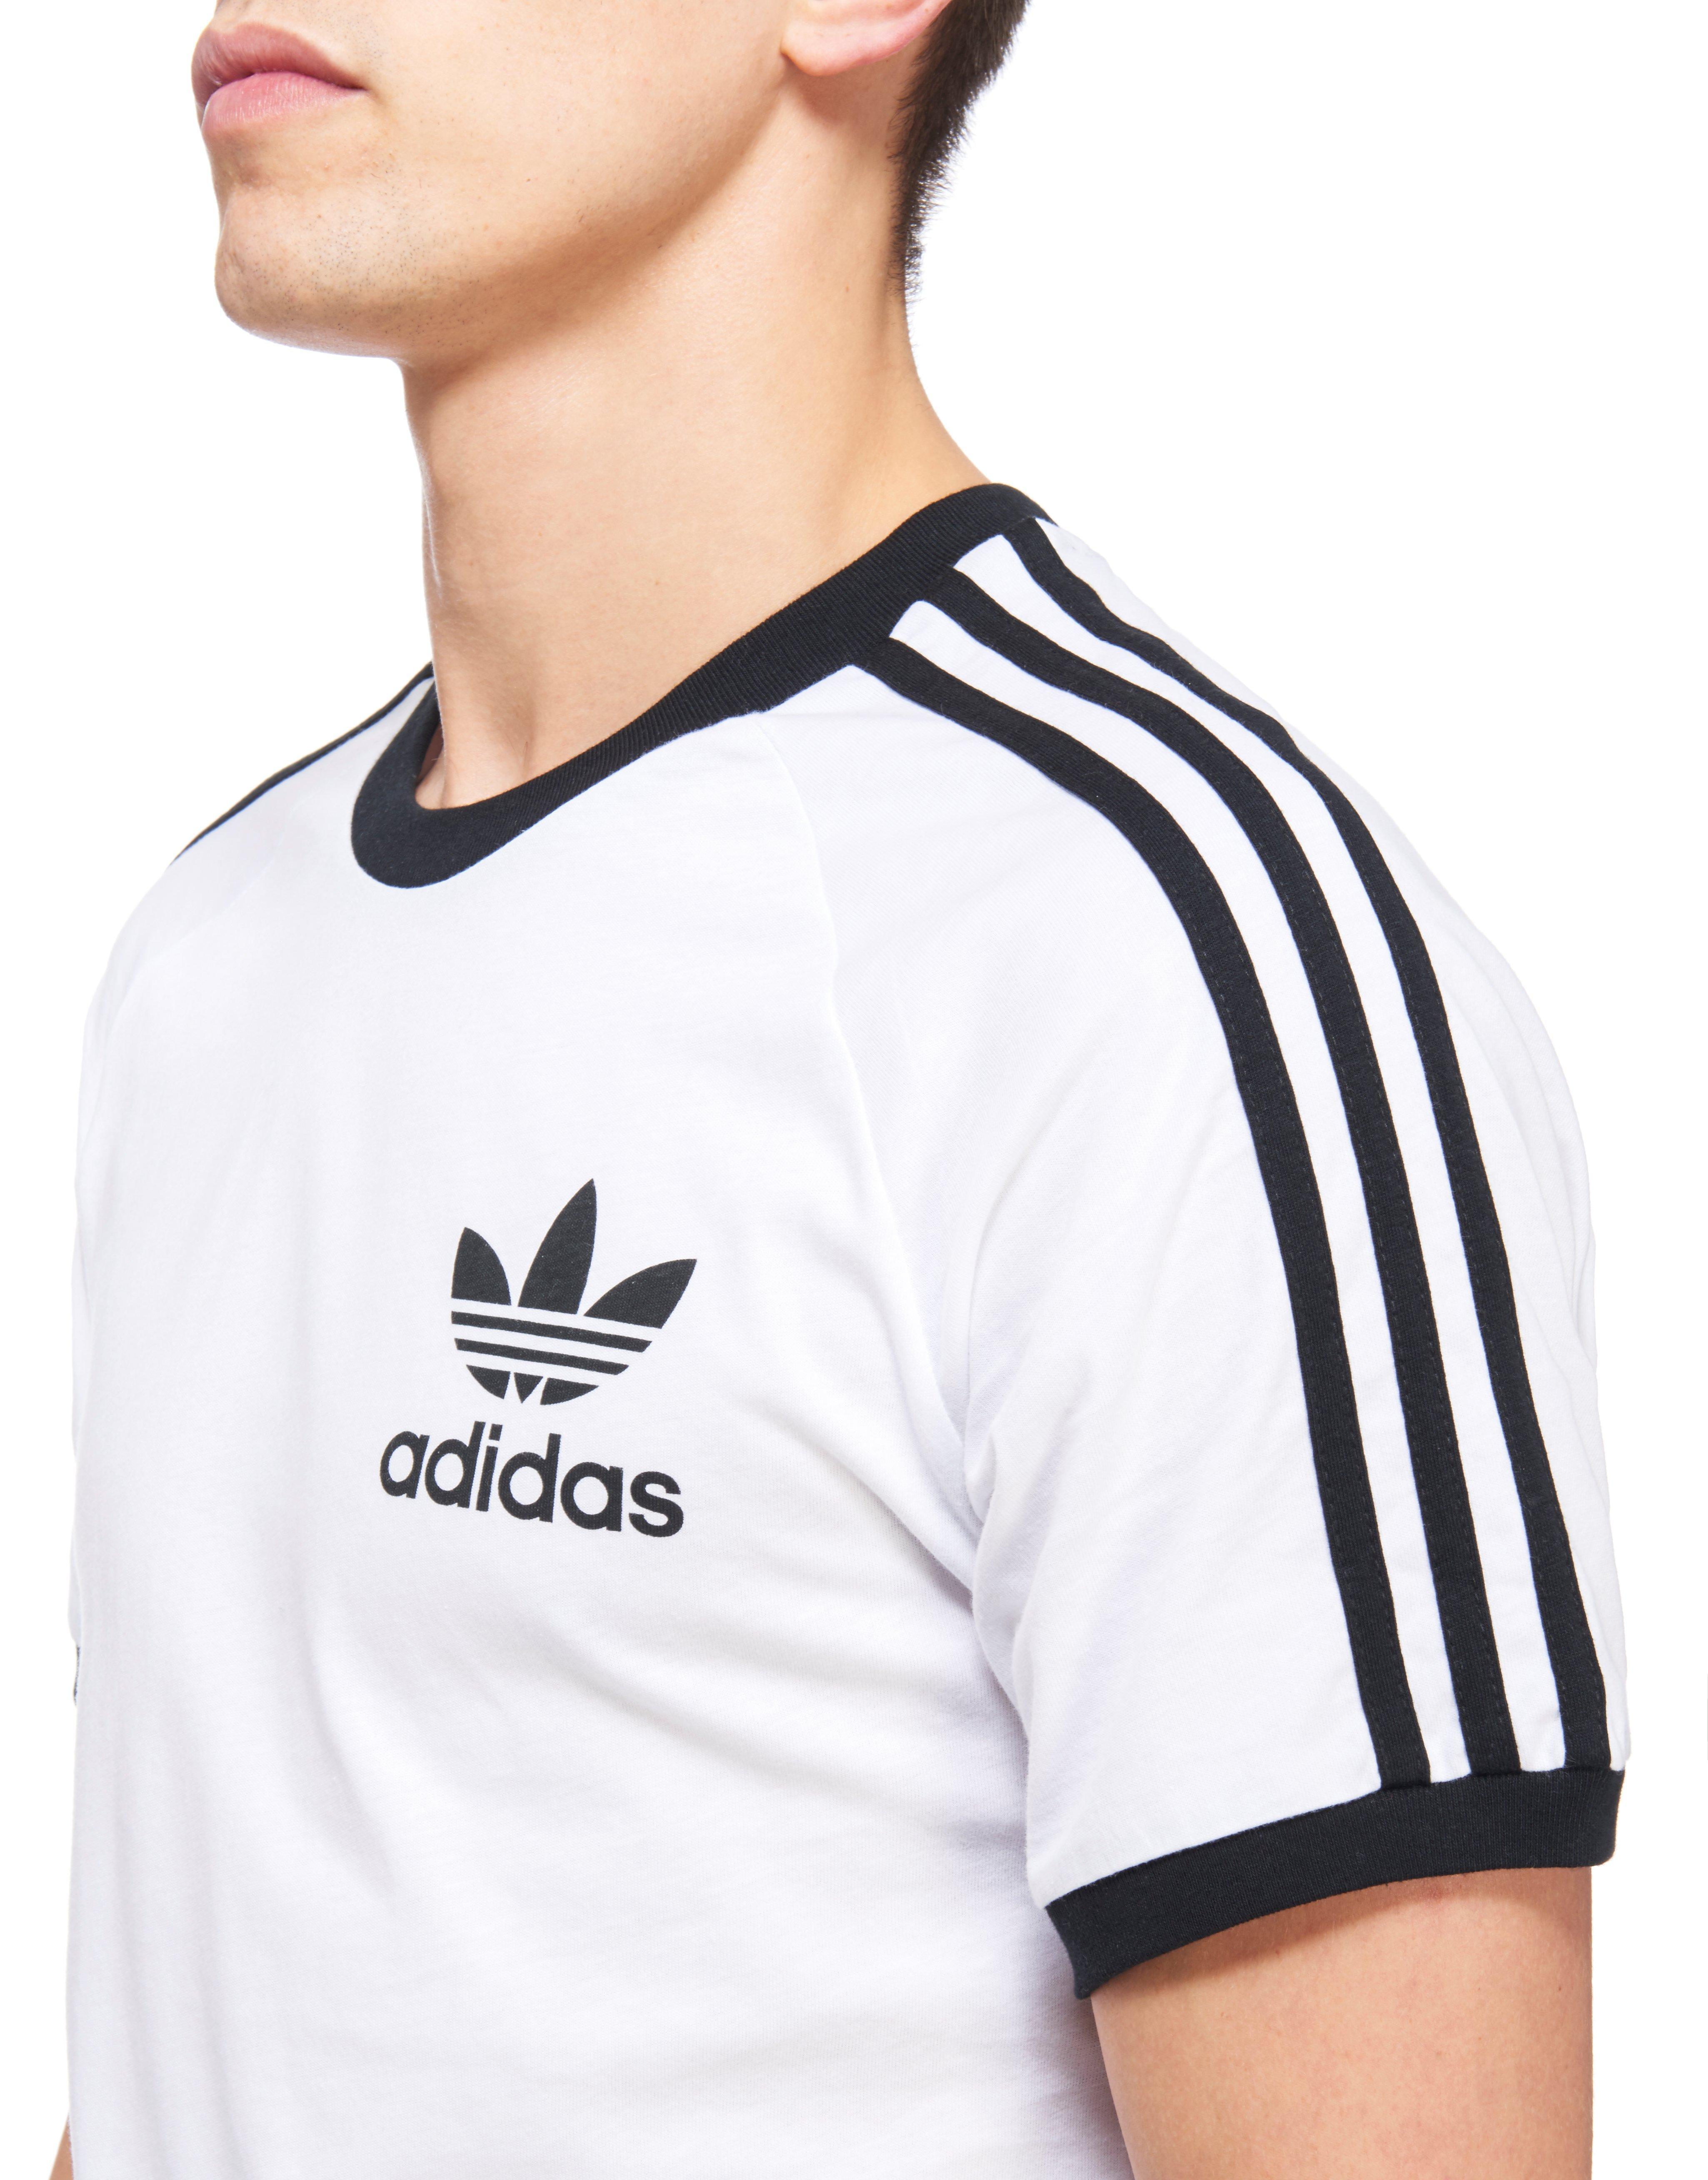 Lyst - Adidas Originals California Short Sleeve T-shirt in White for Men